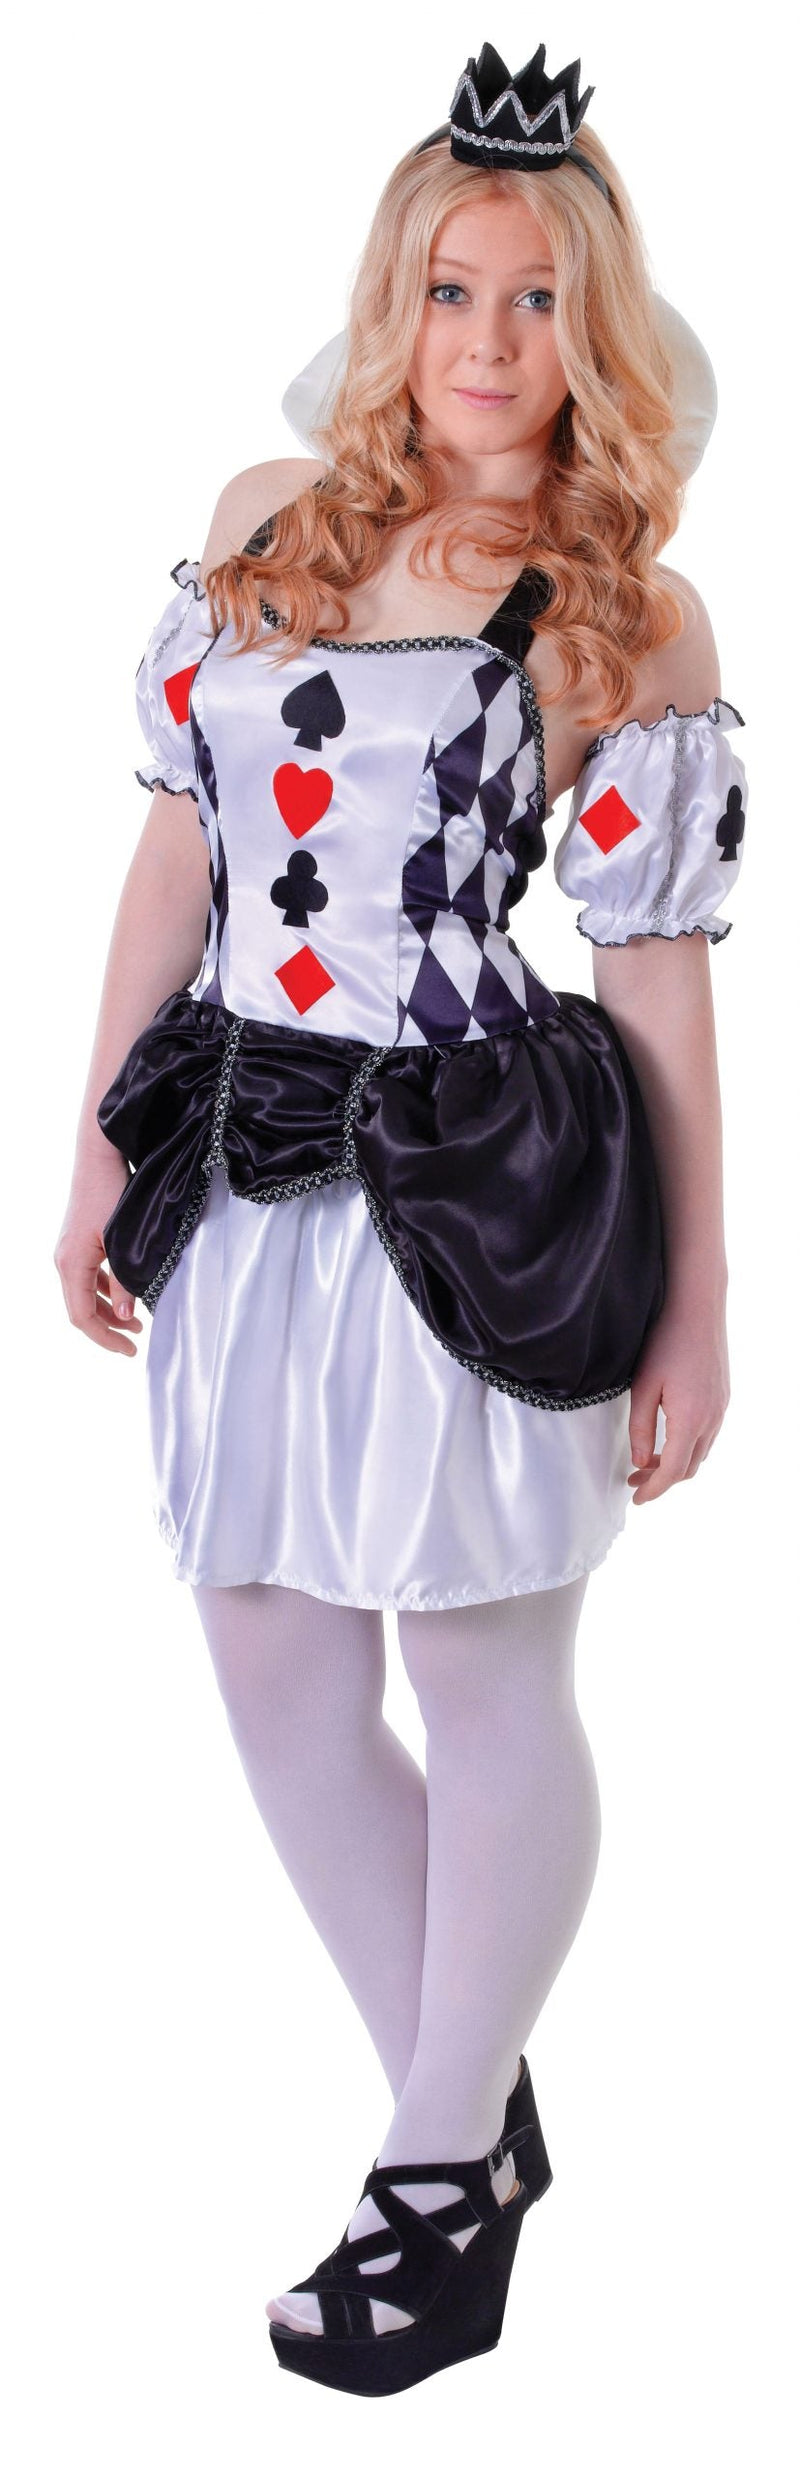 Harlequin Card Teen Costume Female Uk Size 6 10 28" 30" Chest_1 TC106